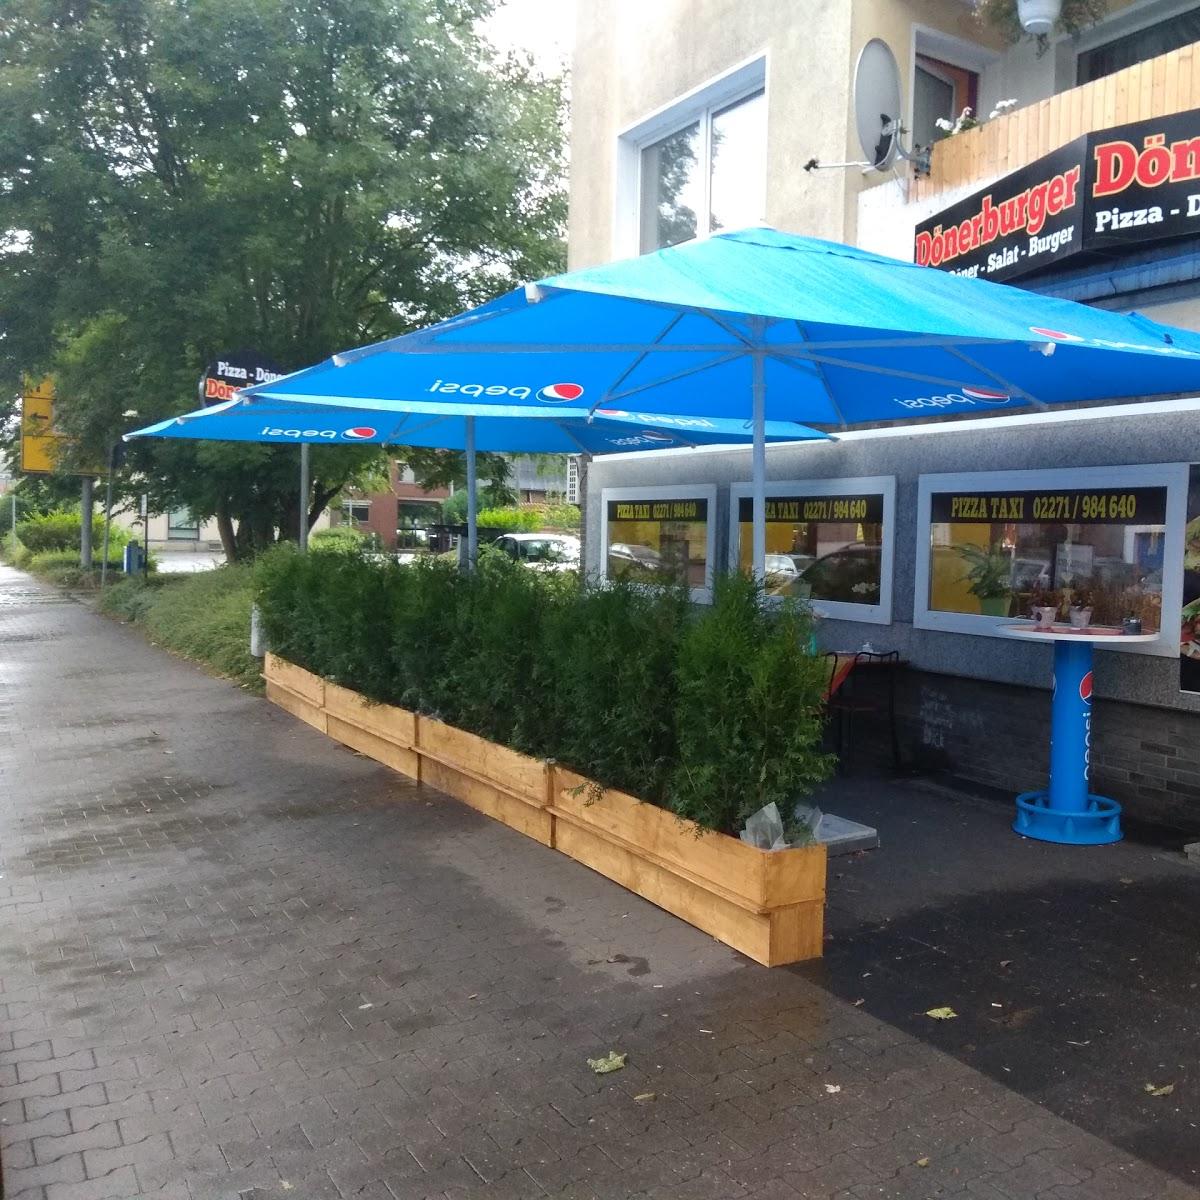 Restaurant "Dönerburger" in Bergheim